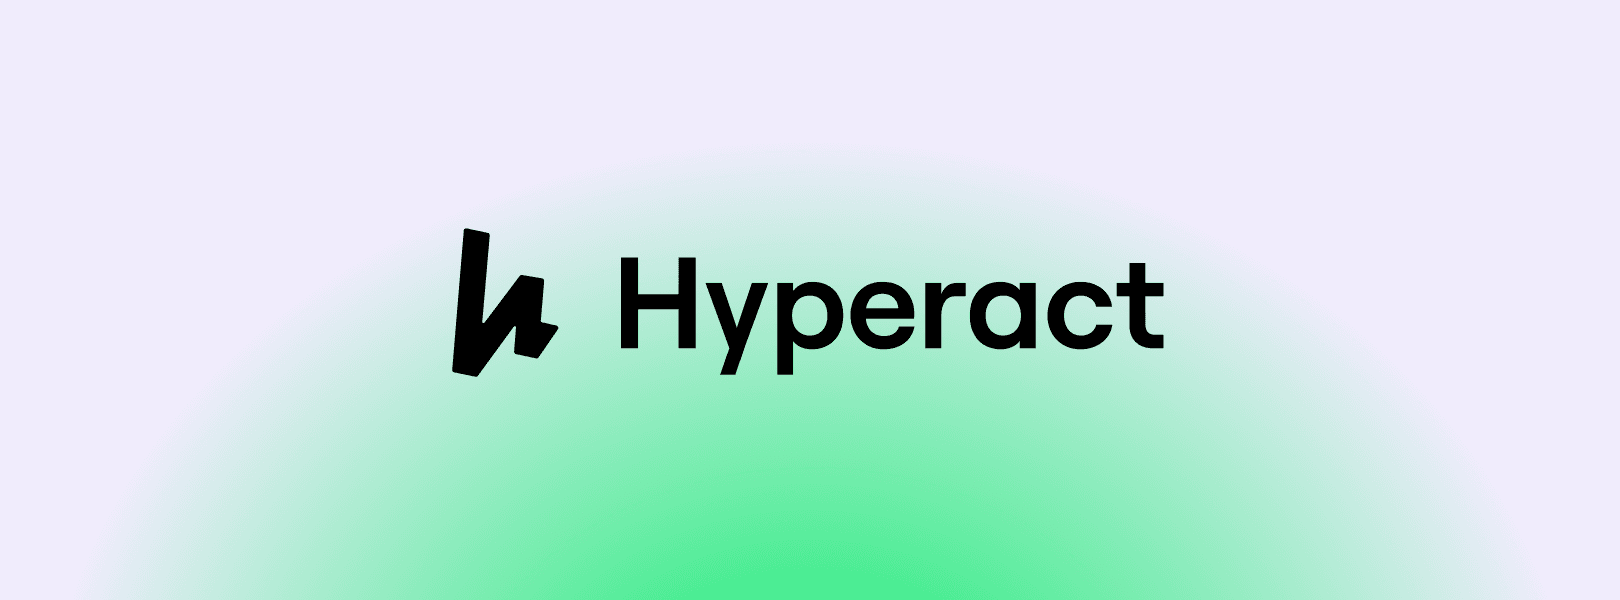 Hyperact logo